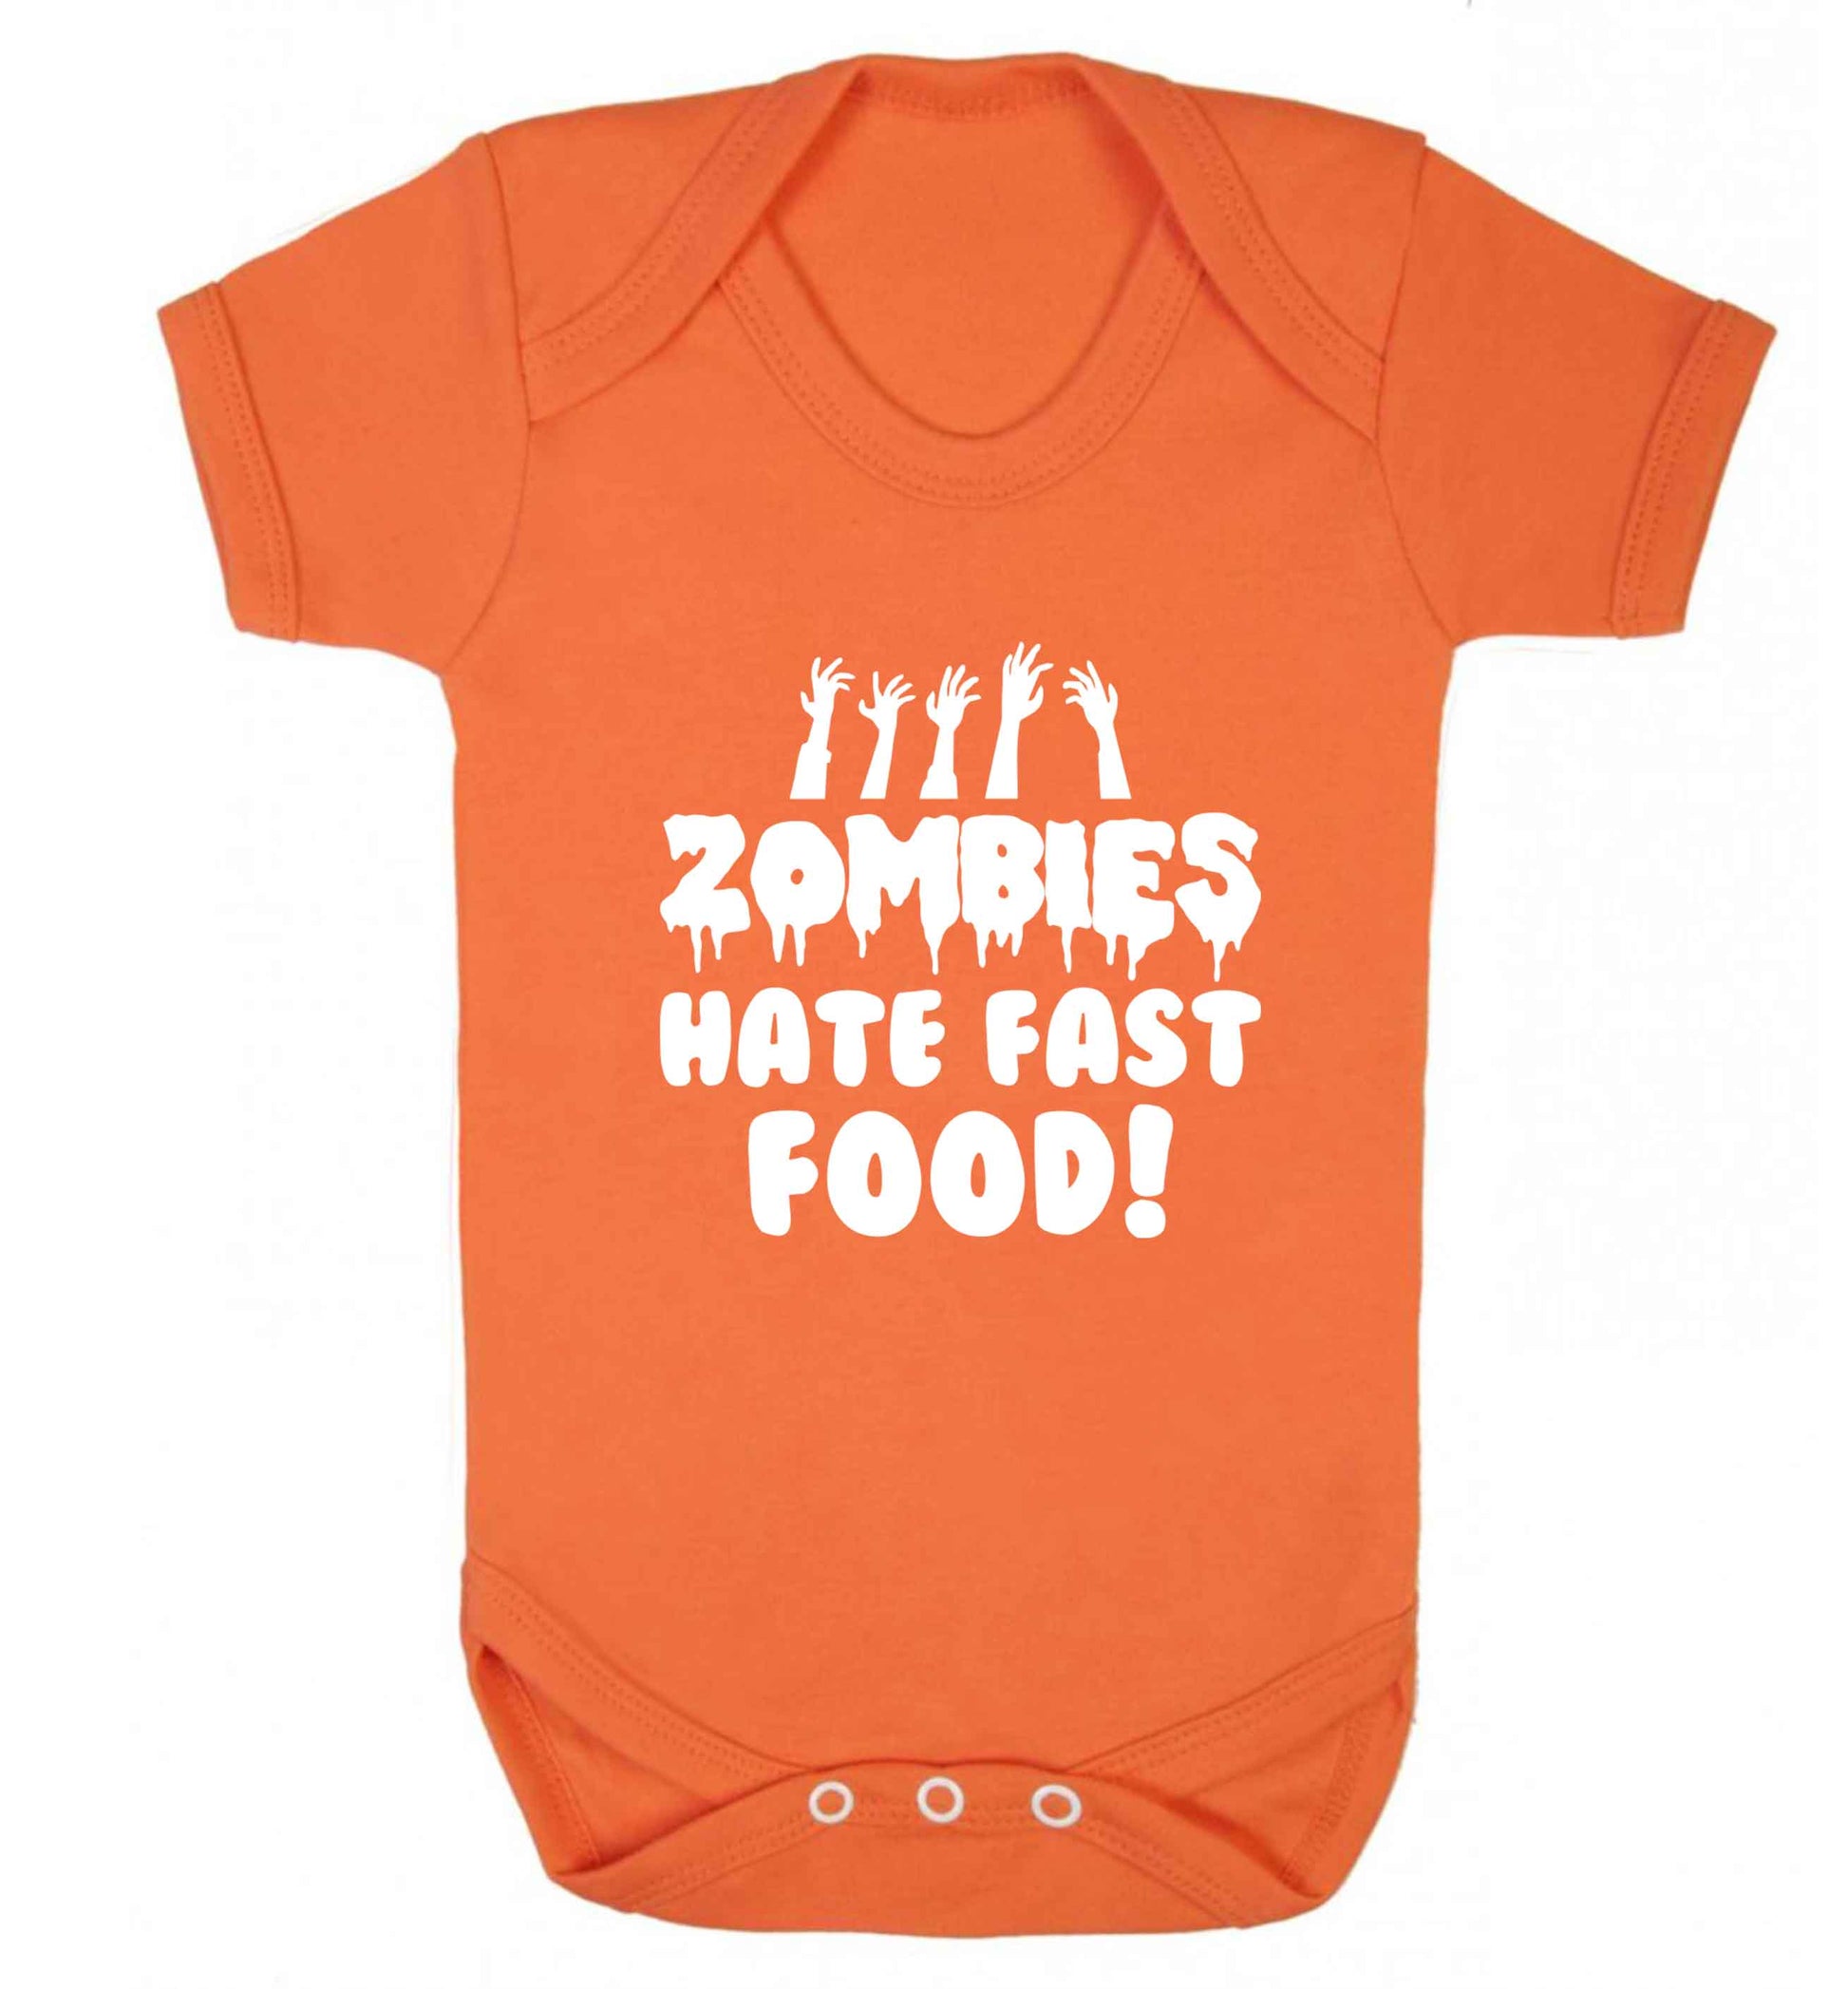 Zombies hate fast food baby vest orange 18-24 months